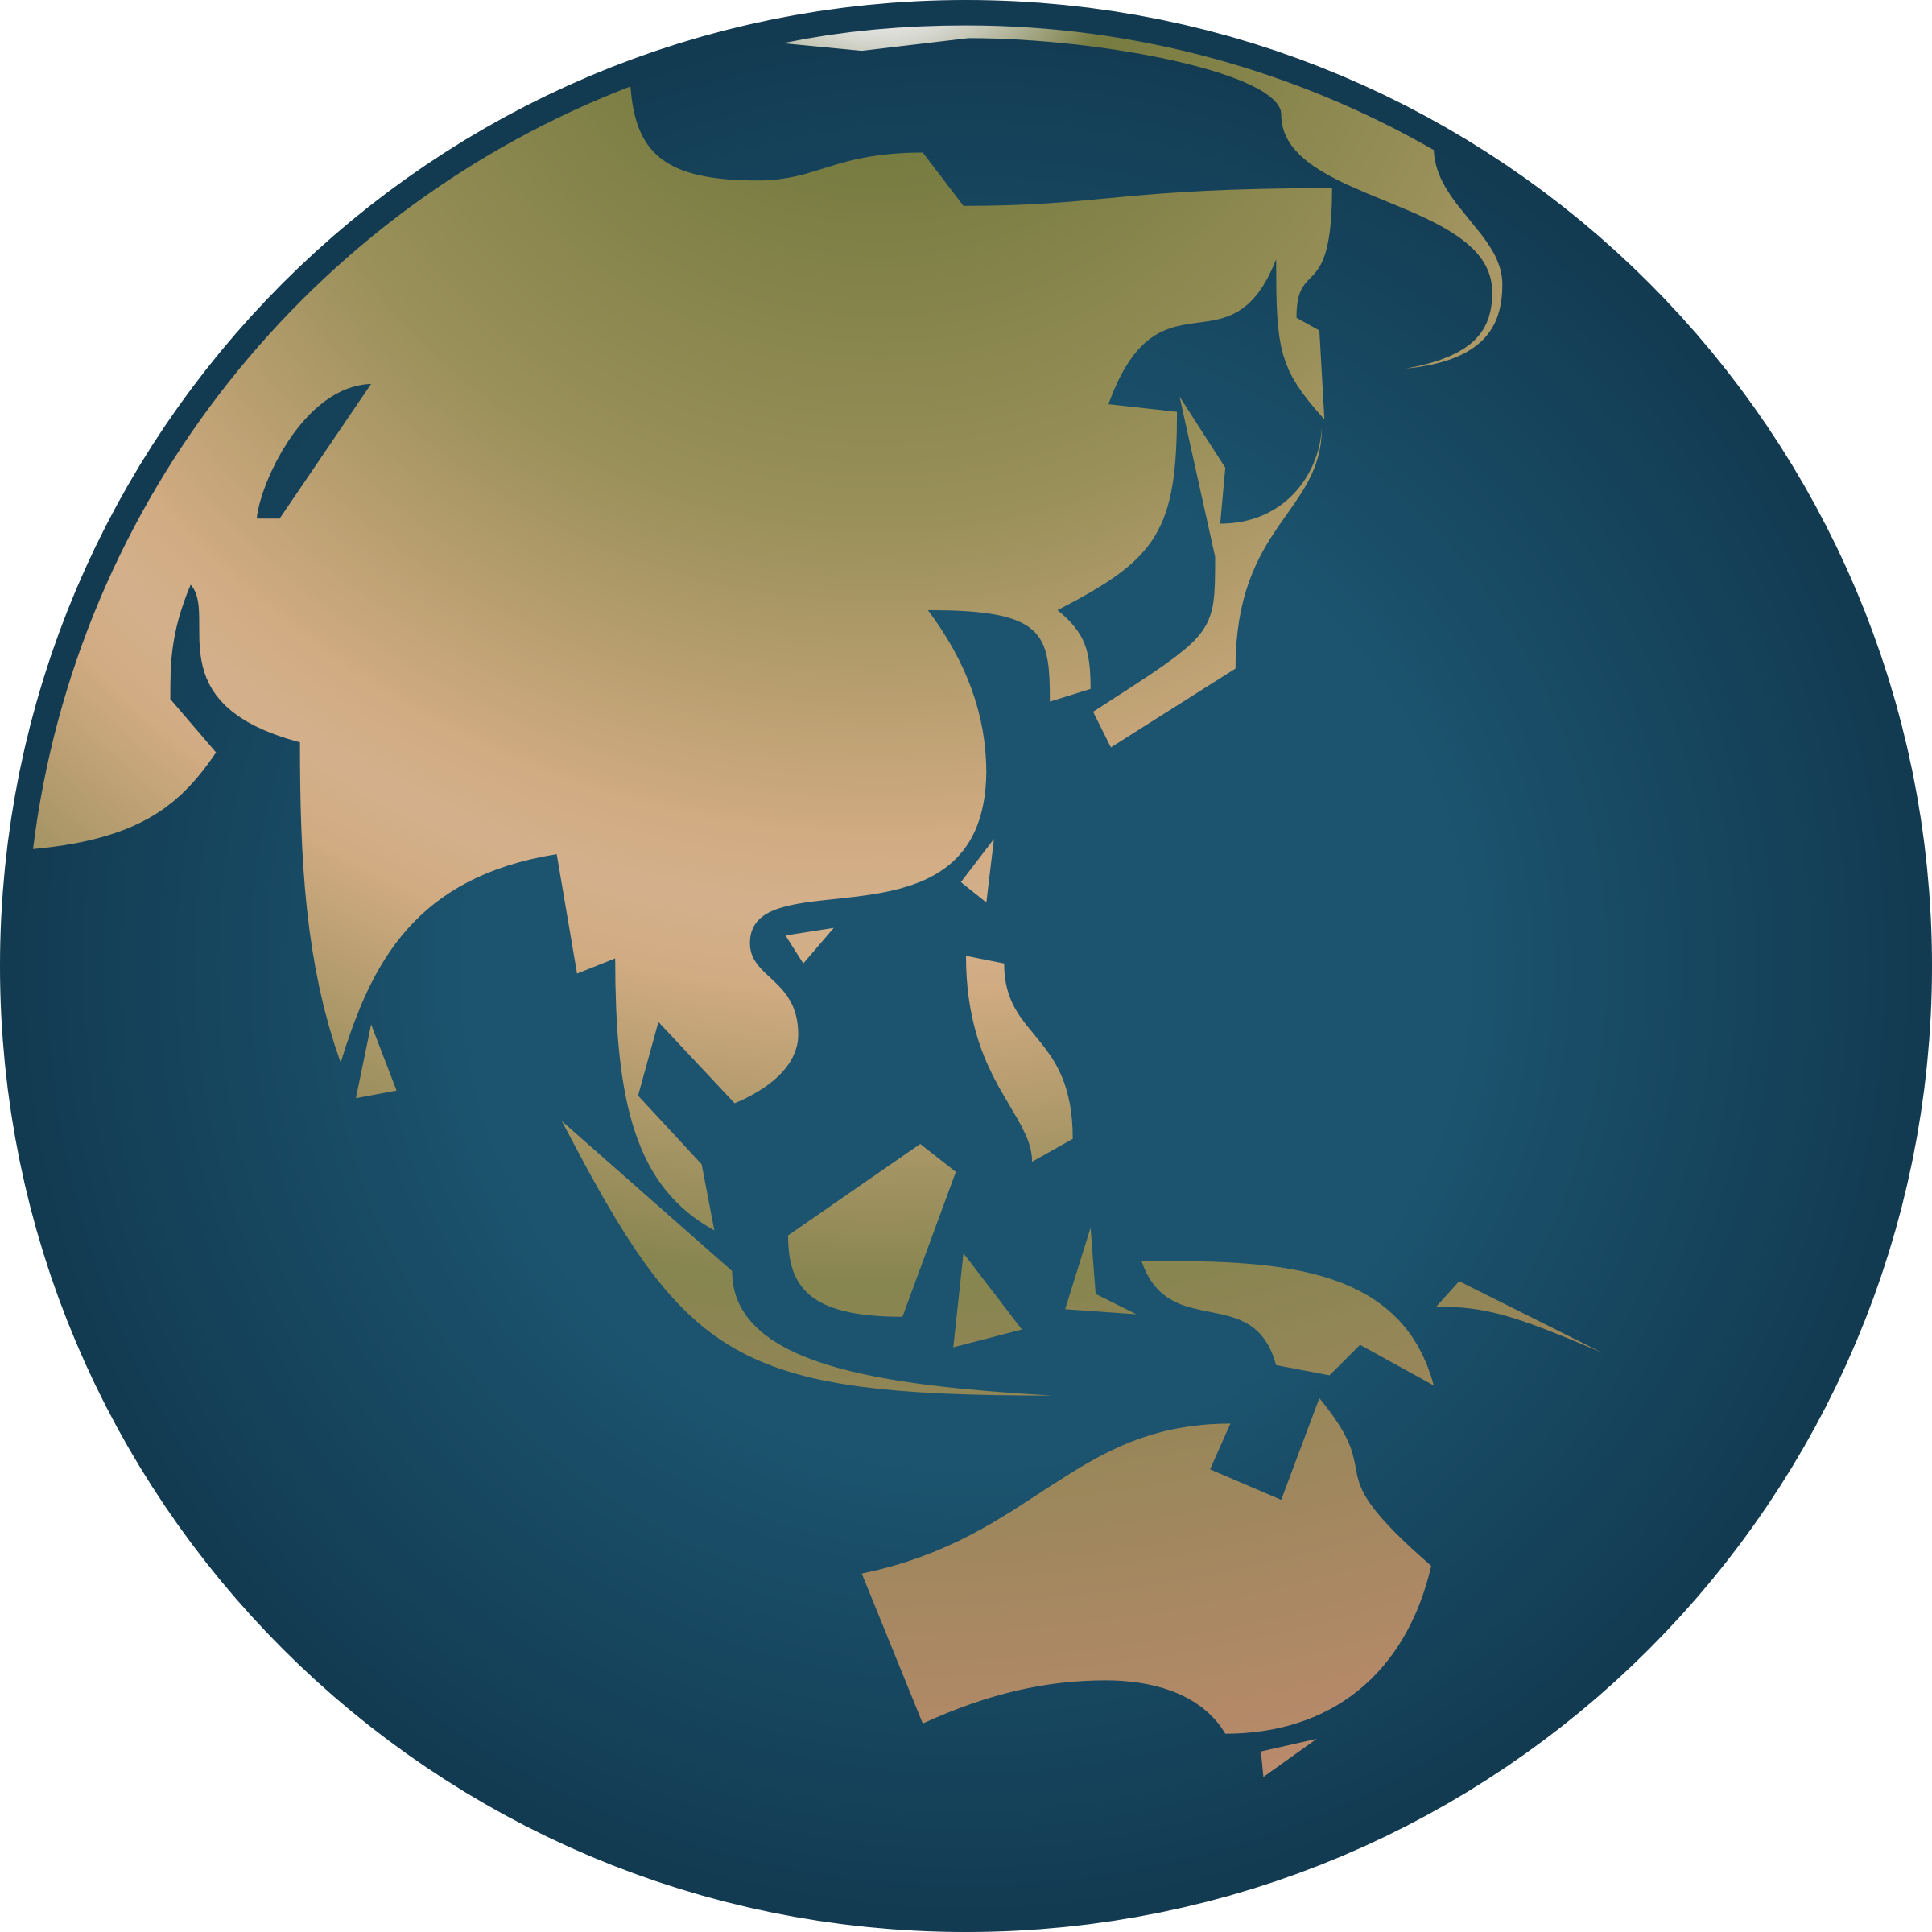 Clipart - Simple Globe facing Asia and Australia